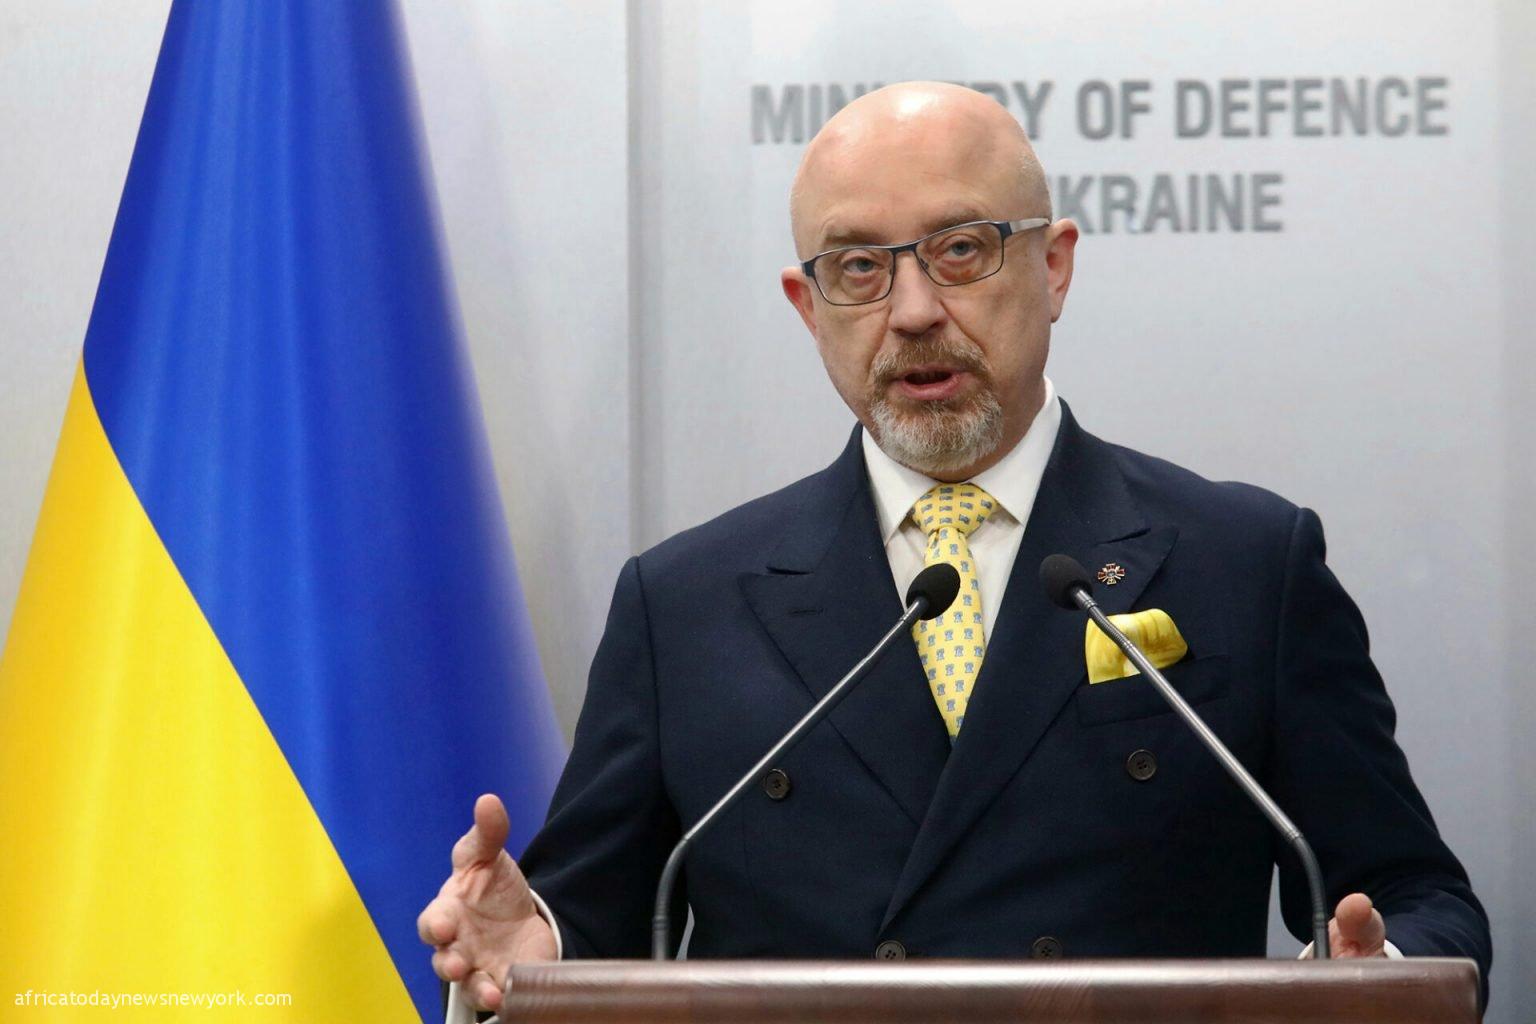 How Ukraine Can Prevail In War Against Russia - Reznikov